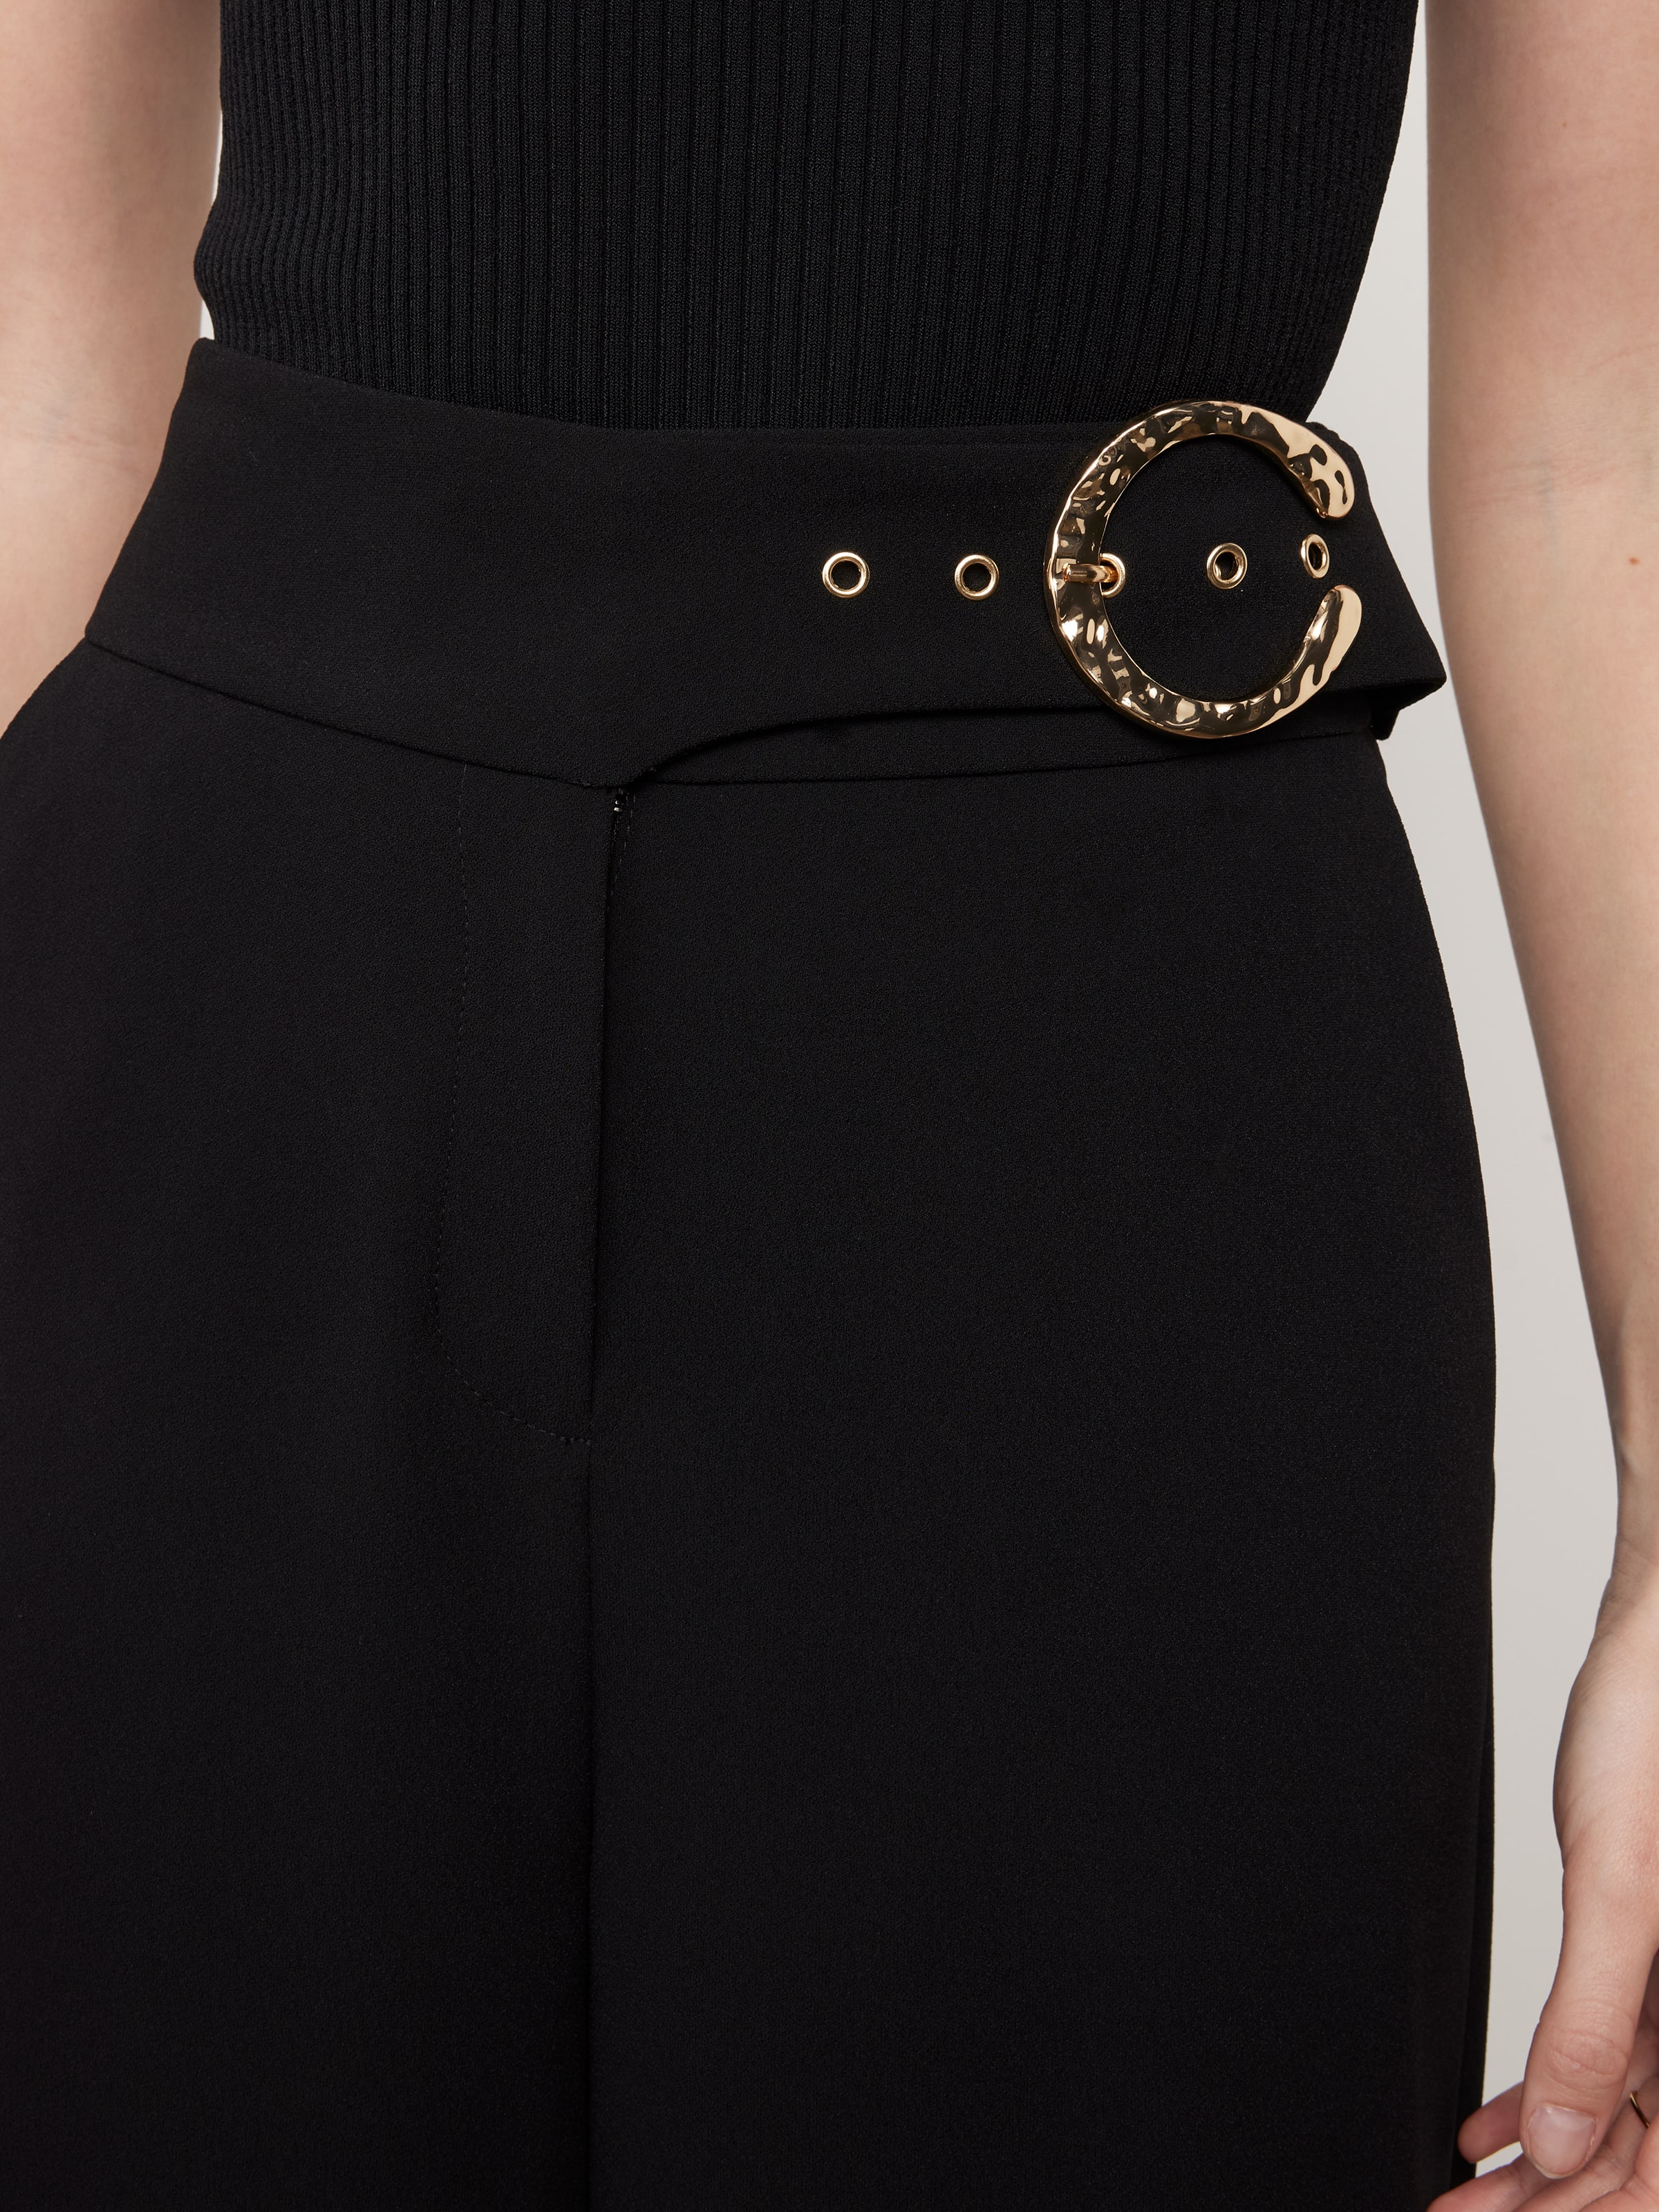 20+ easy ideas to style a black pencil skirt  Pencil skirt outfits, Black  pencil skirt outfit, Black pencil skirt